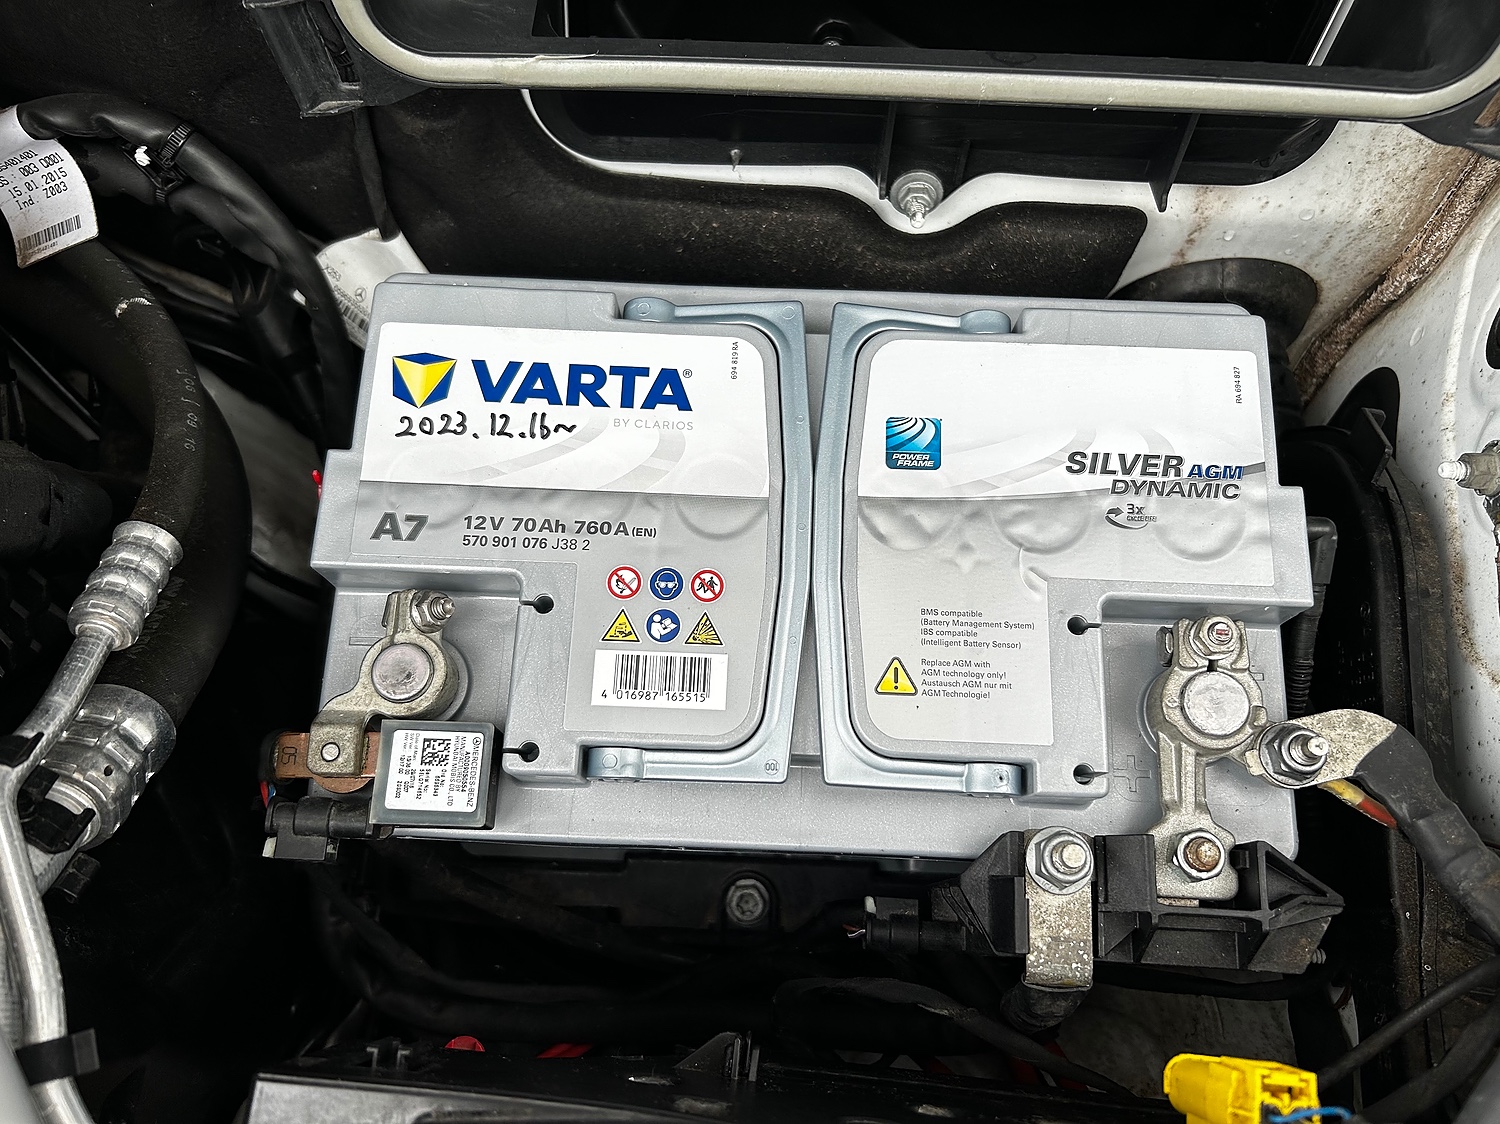 VARTA Silver dynamic AGM E39 570 901 076 のパーツレビュー, A3スポーツバック(kazz0831)